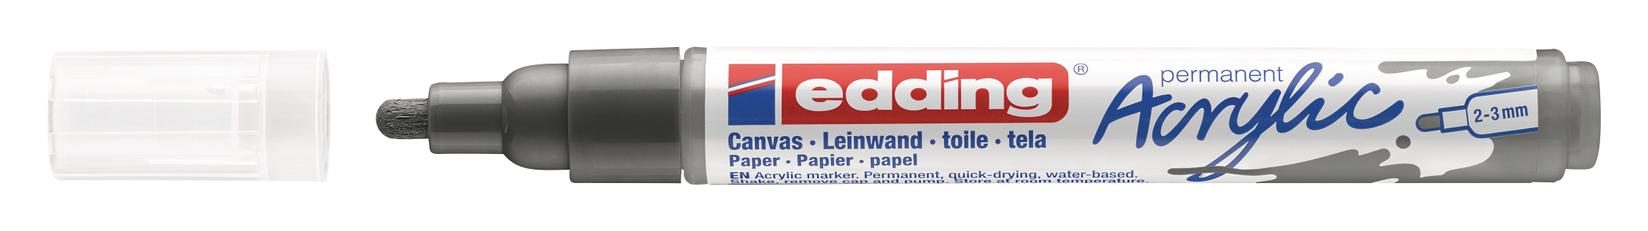 EDDING Akrilni marker medium 2-3mm obli vrh E-5100 antracit